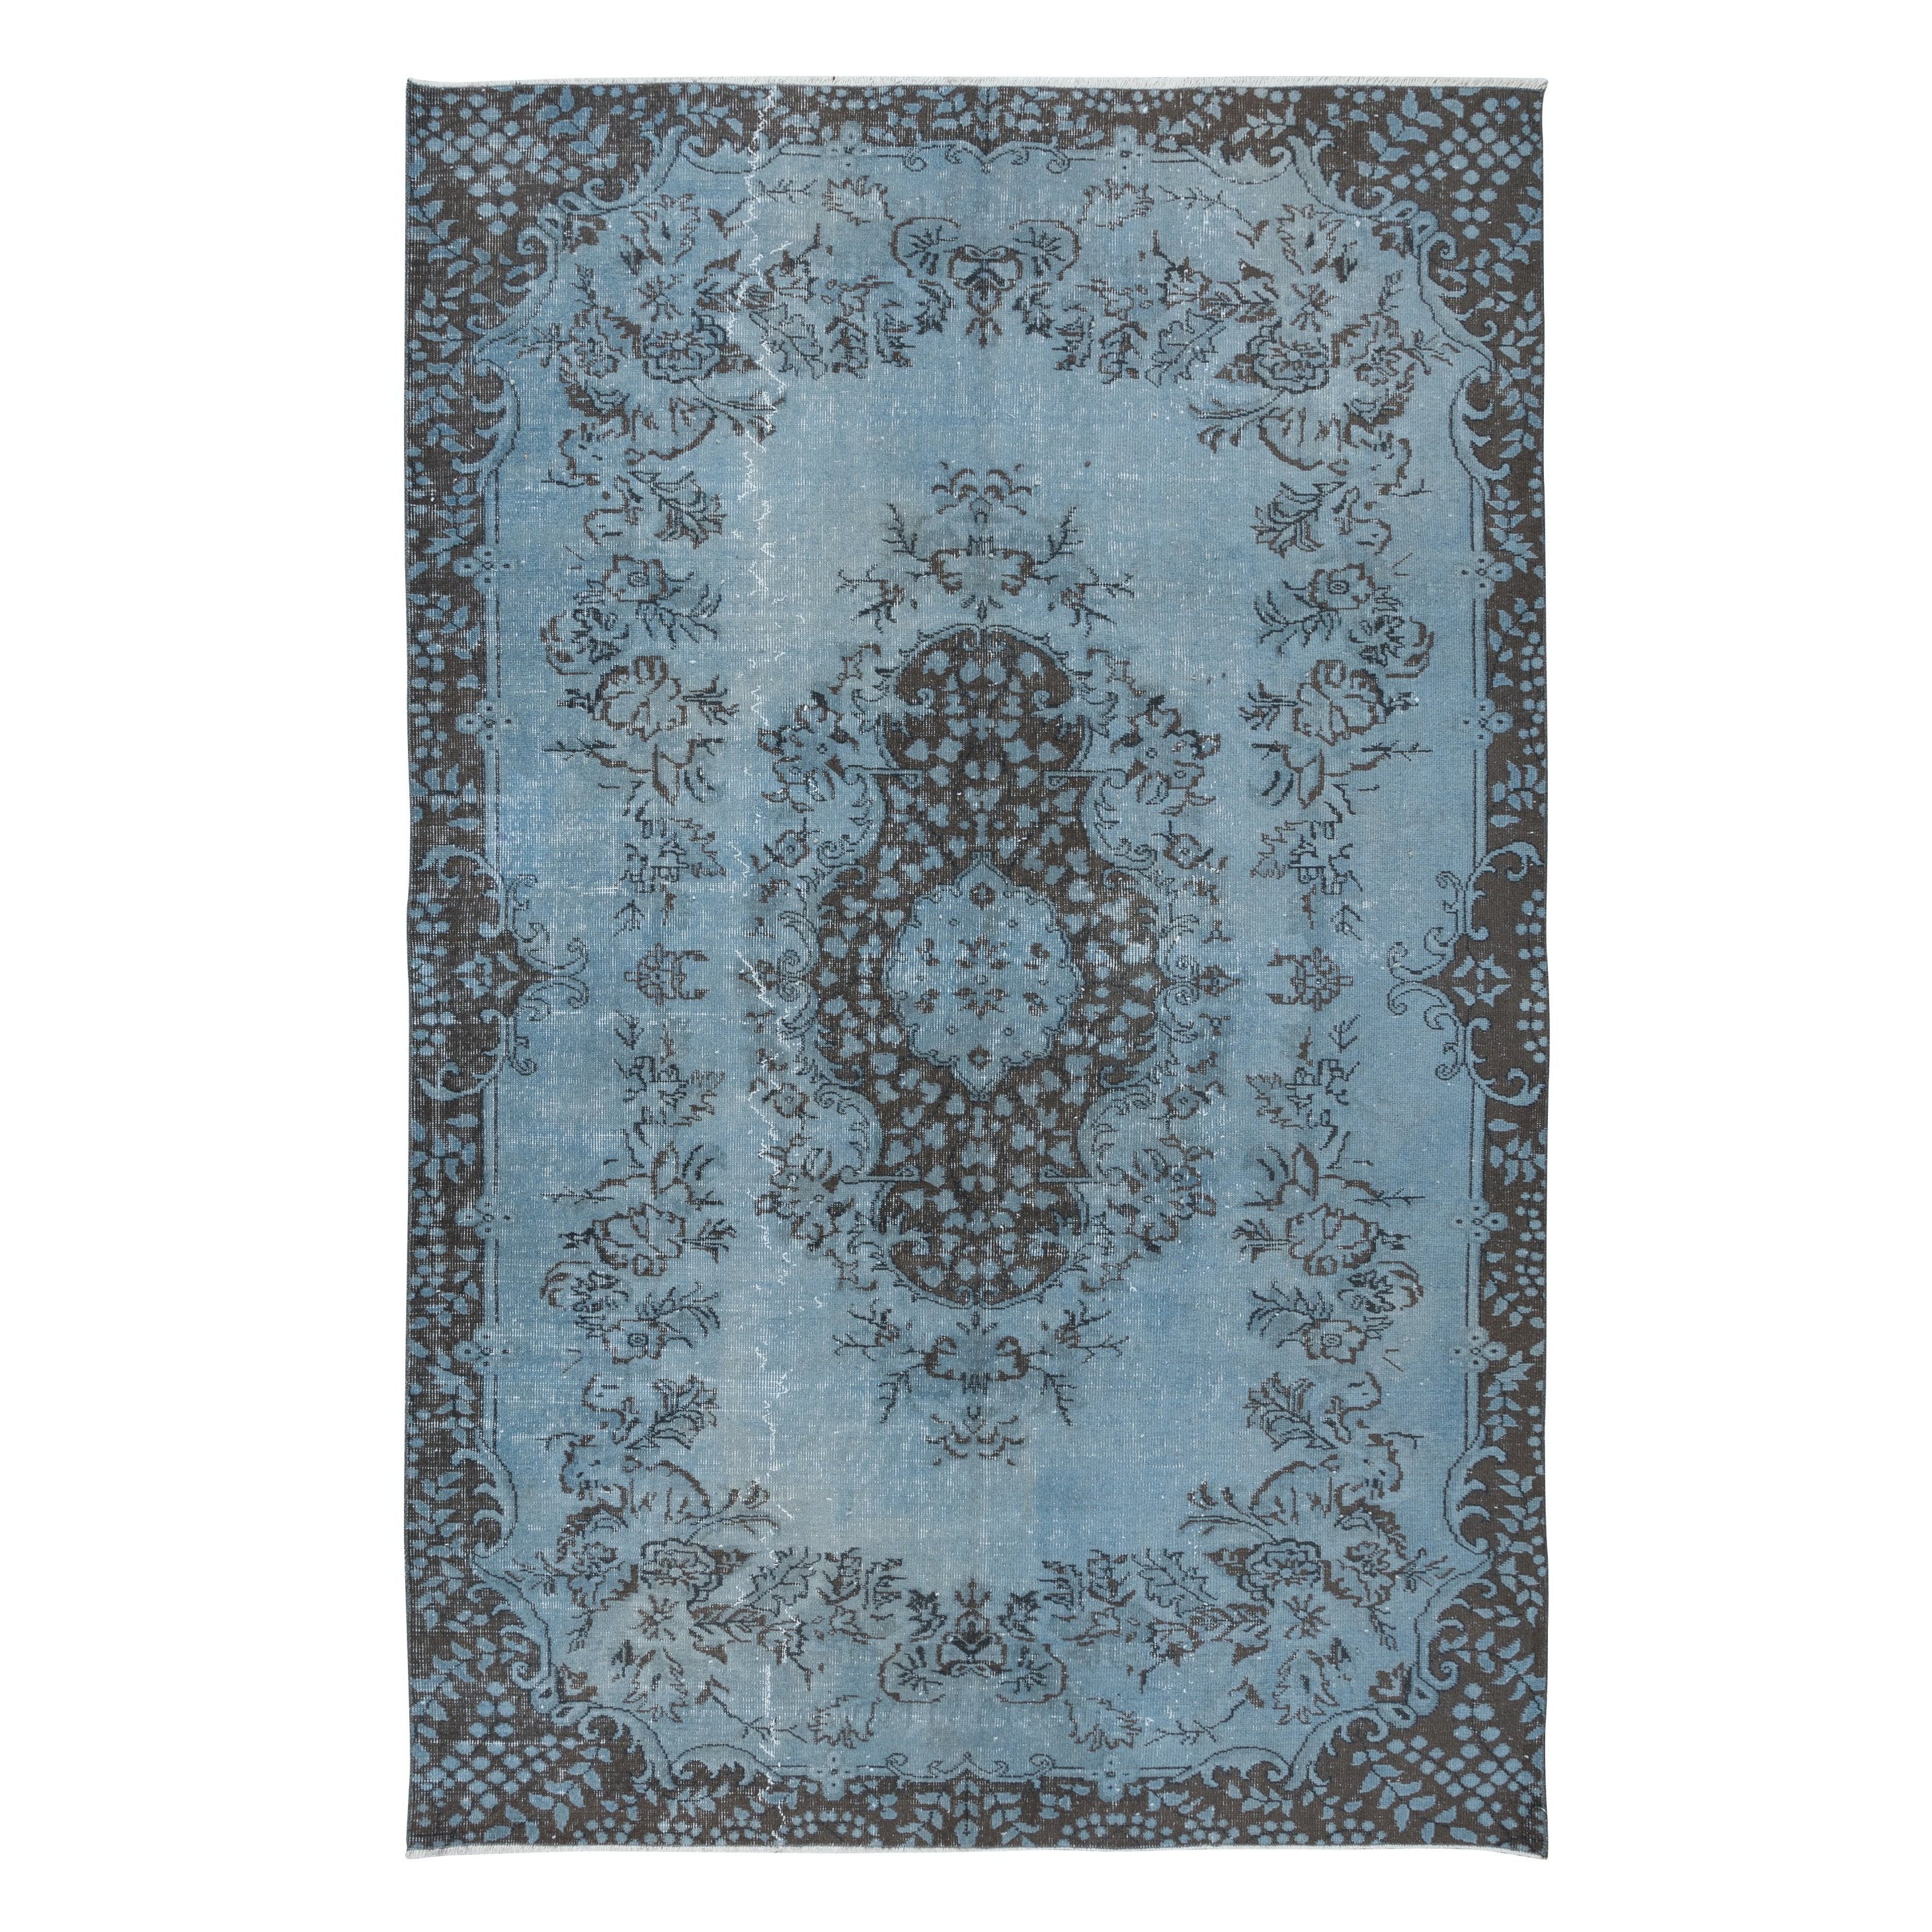 6x9.3 Ft Contemporary Handmade Rug in Light Blue, Sky Blue Anatolian Wool Carpet (Tapis de laine anatolienne bleu ciel)